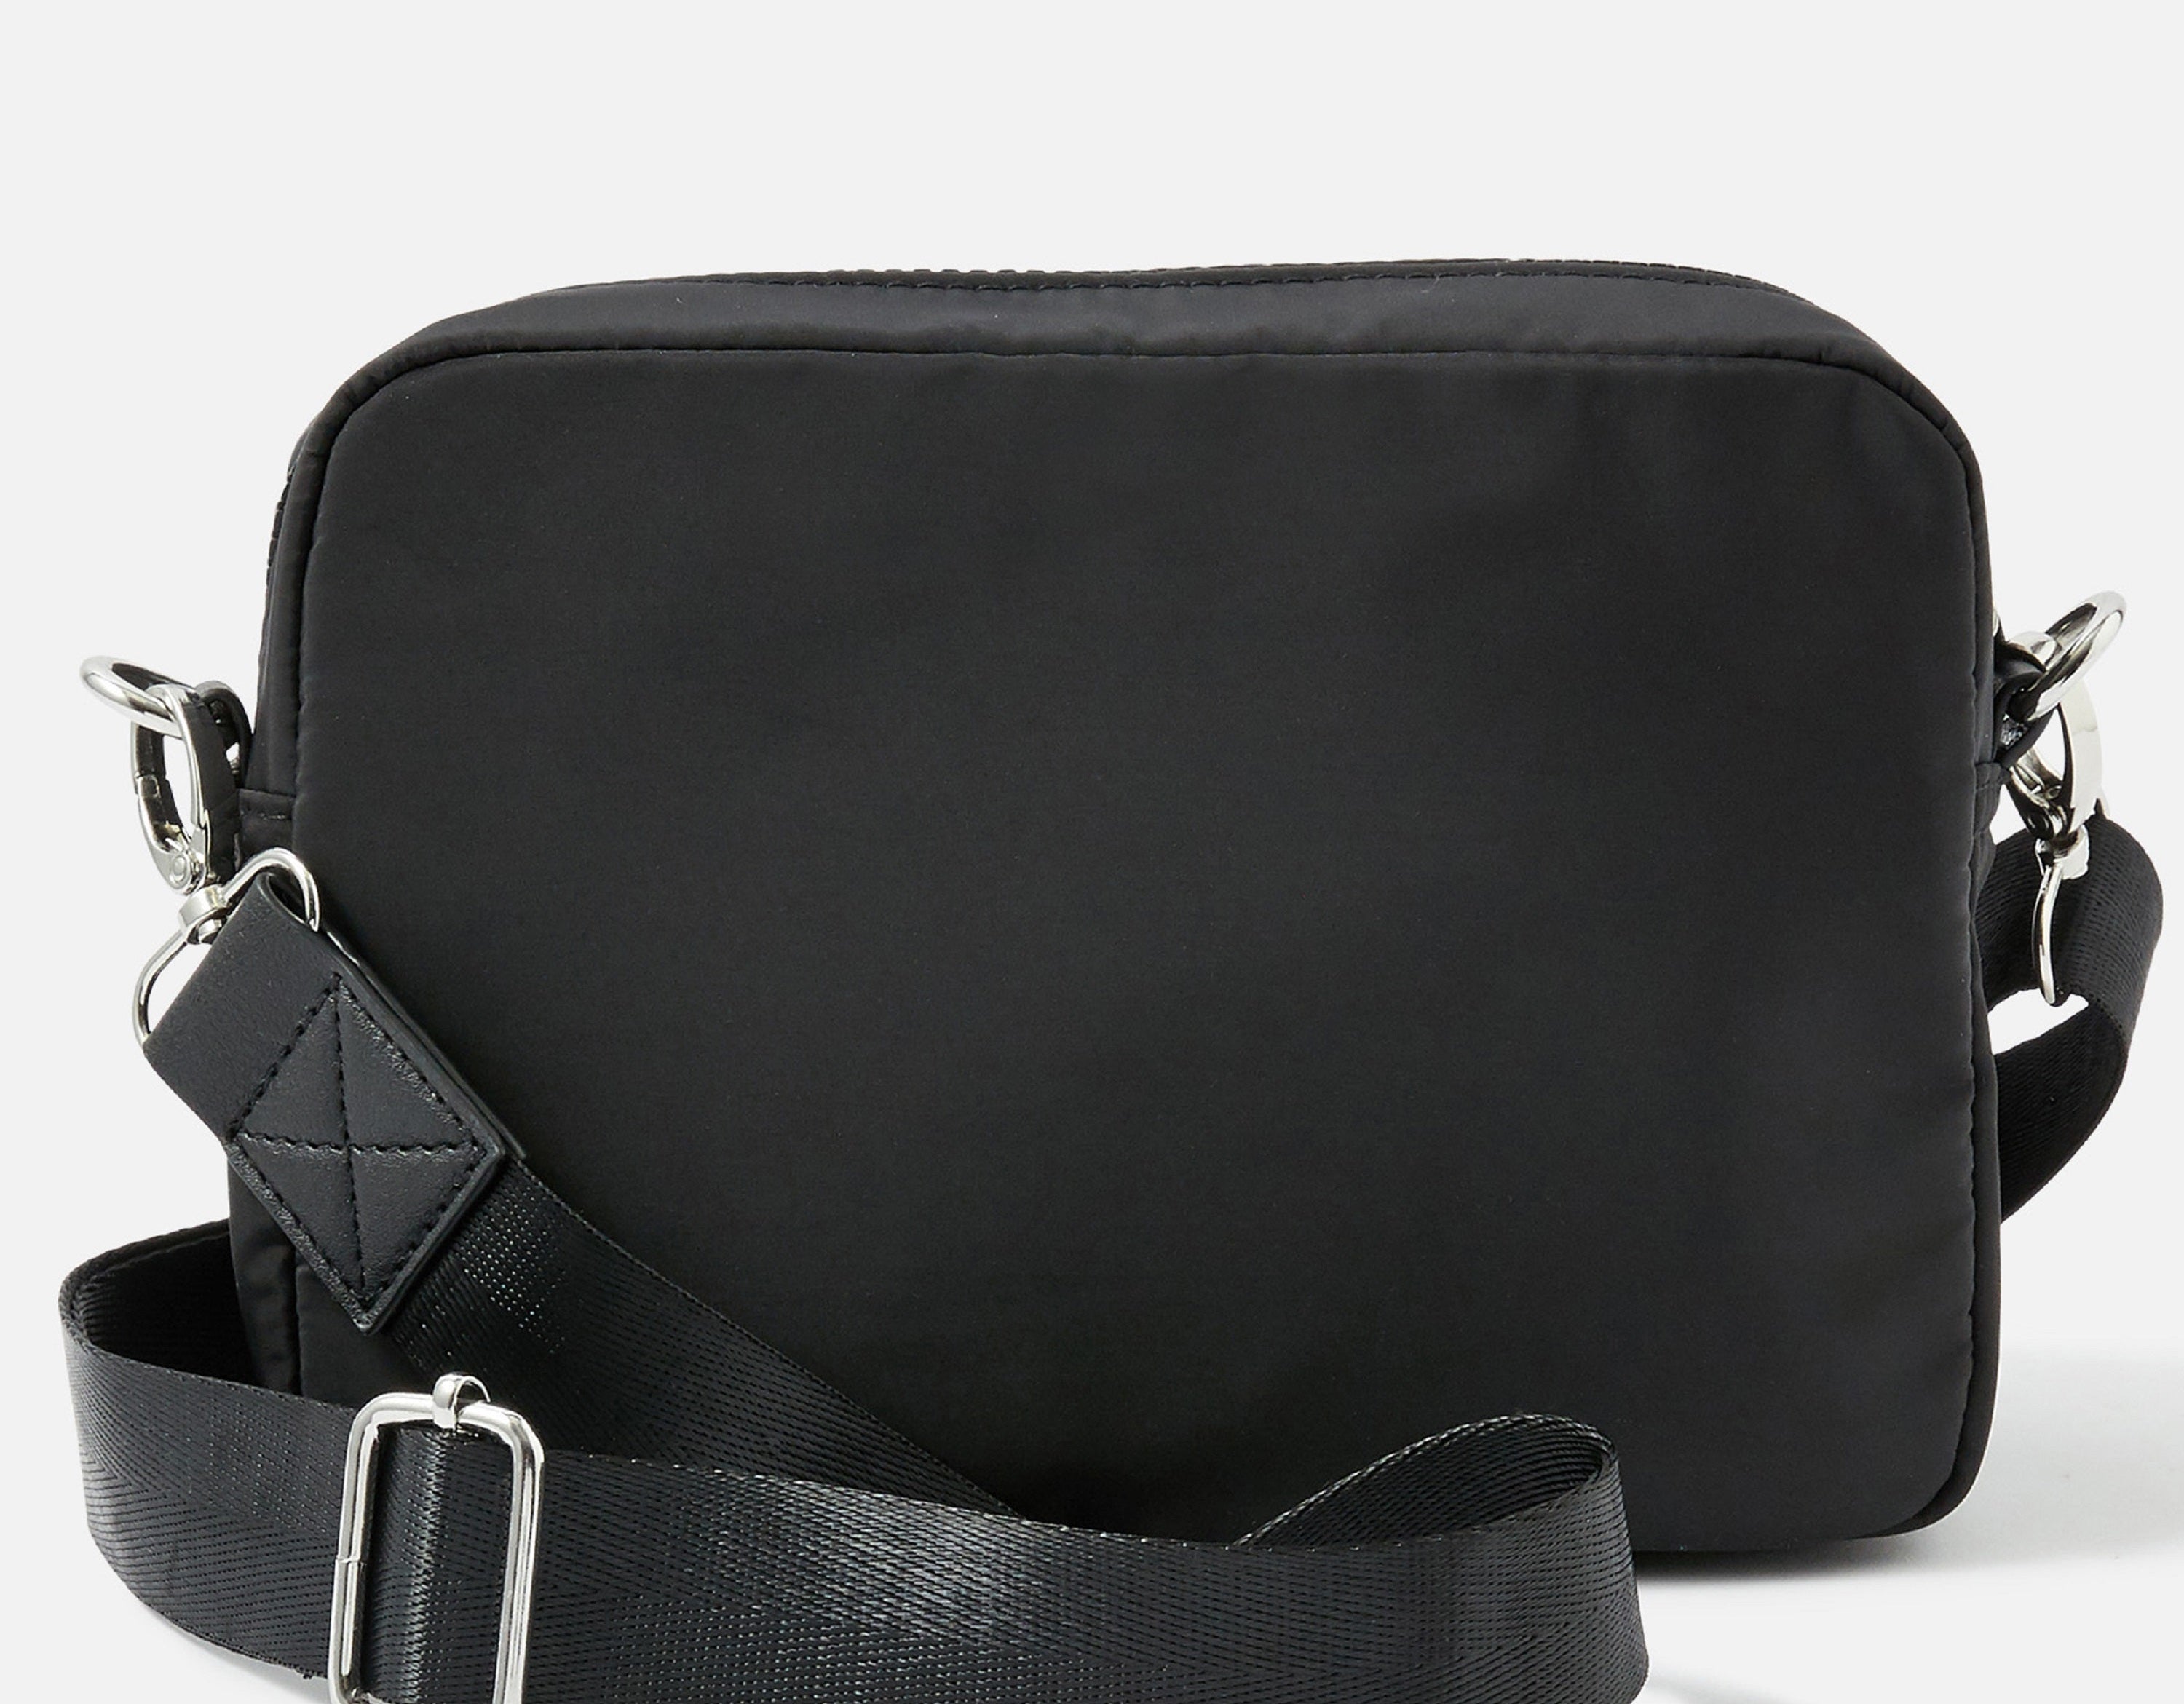 Accessorize London women's Black Cali Sling bag